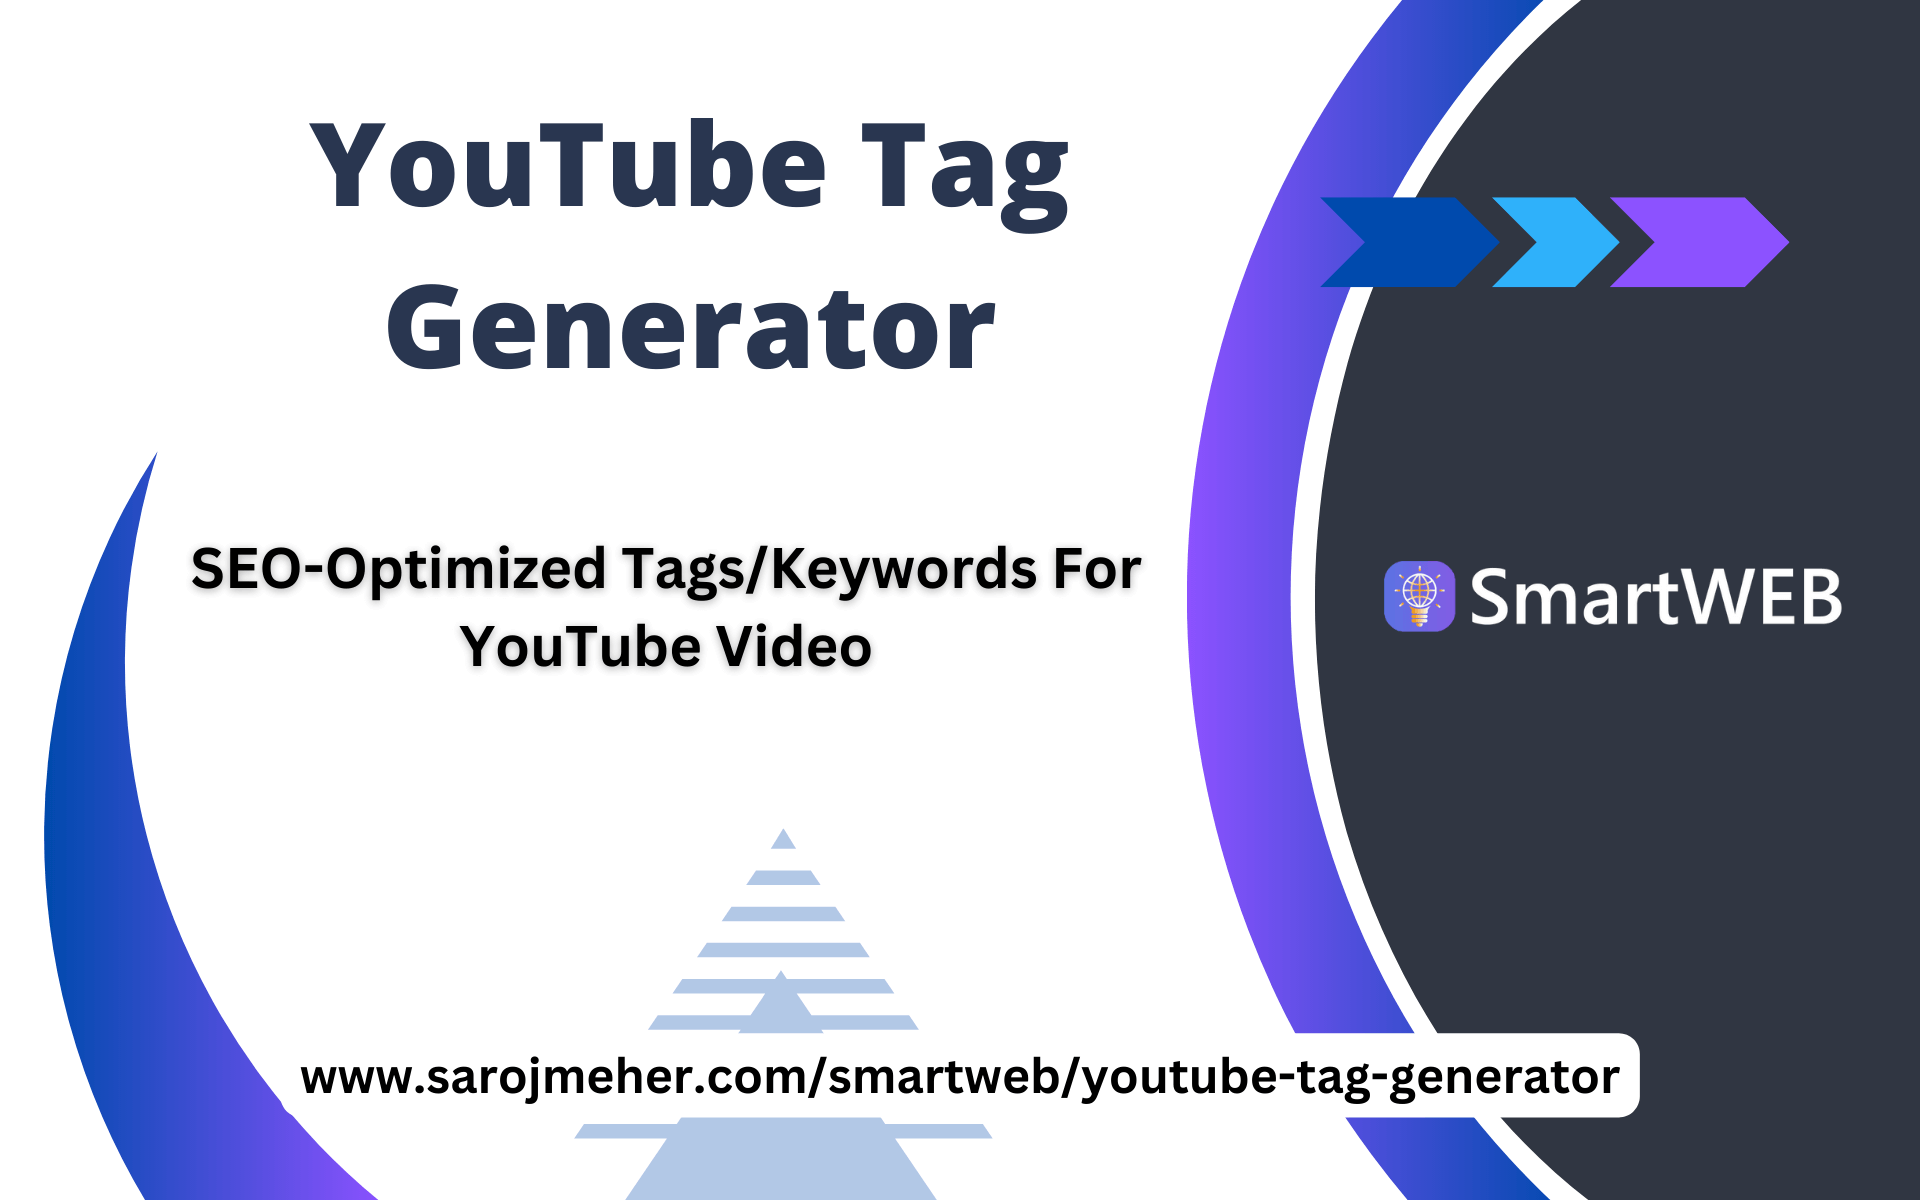 YouTube Tag Generator